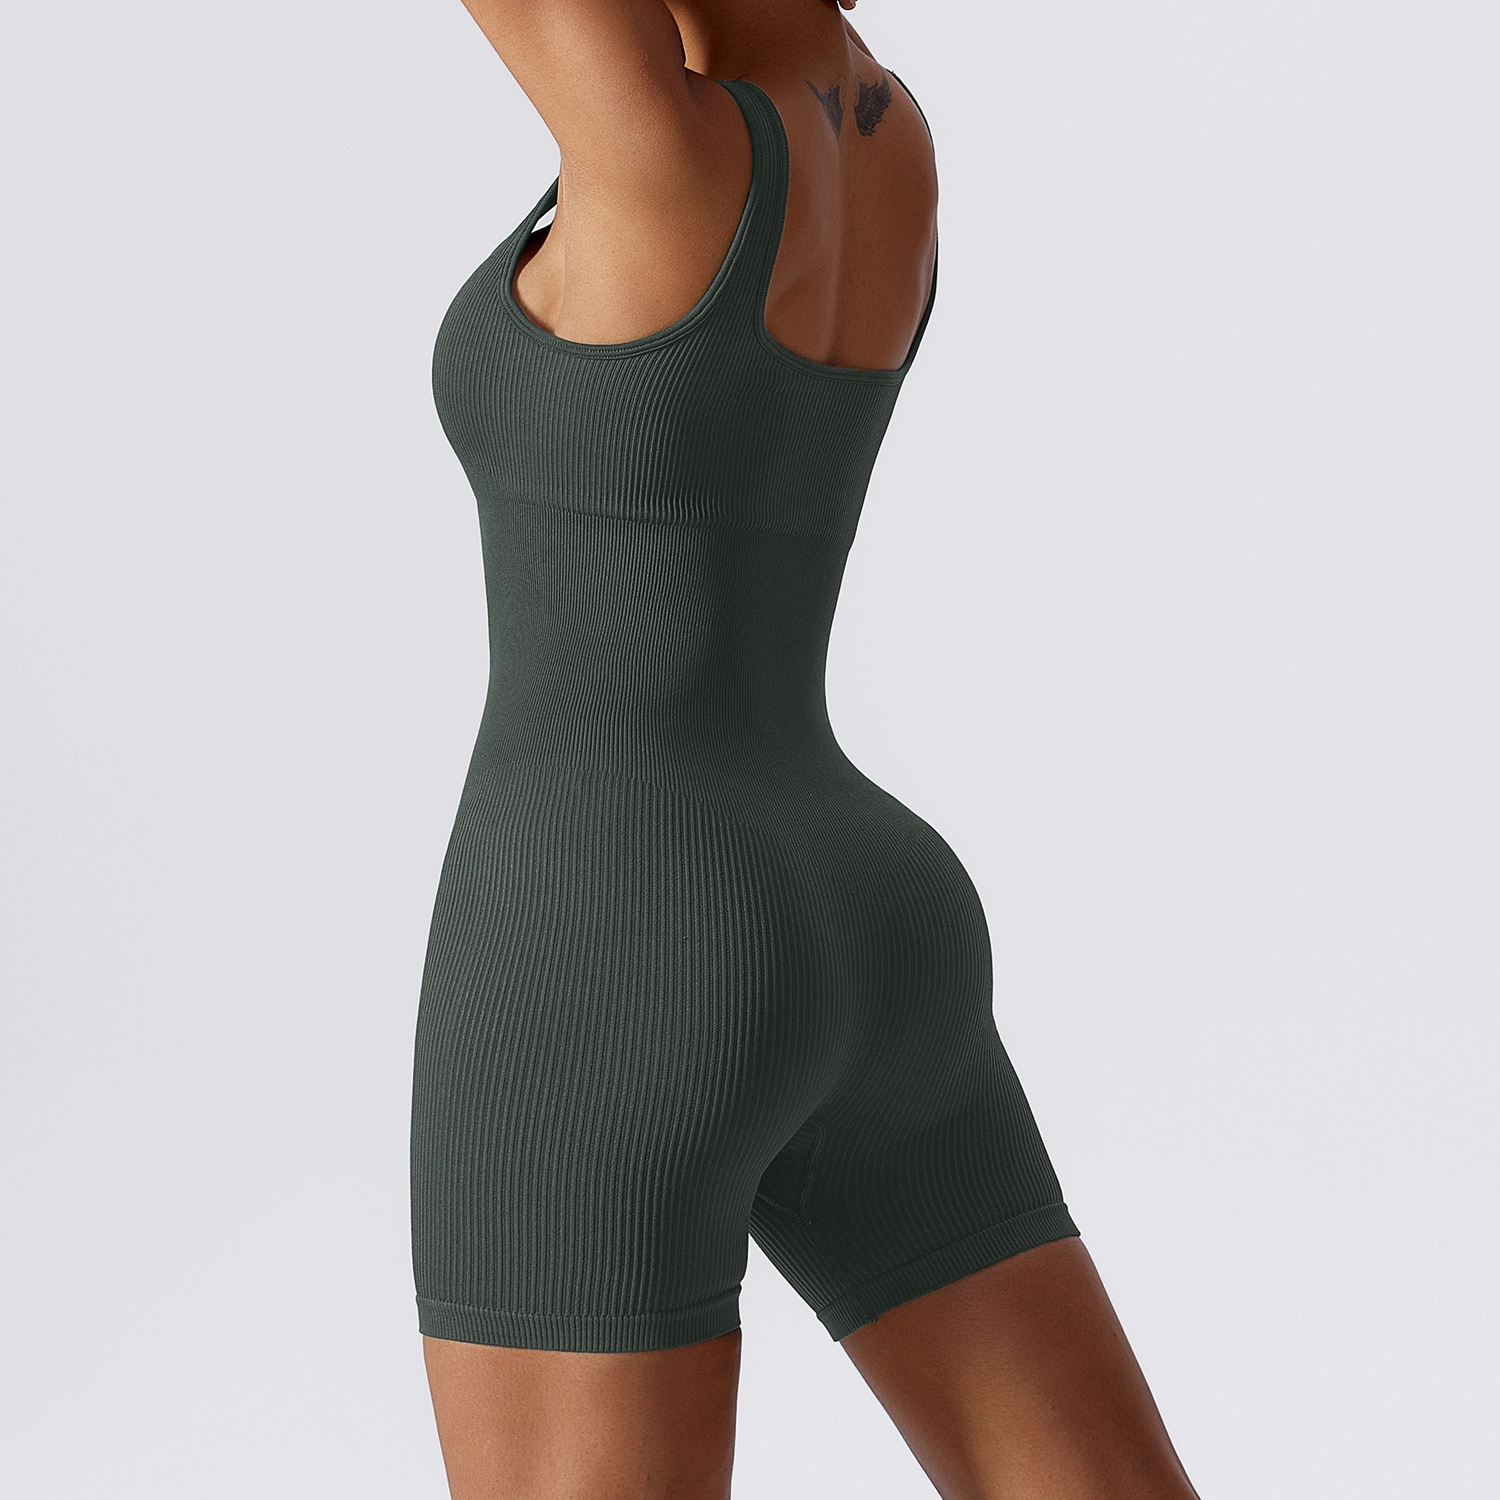 Wholesale Camouflage 2pcs/set Women's Fitness Sports Wear Outdoor Sets Gym Clothing Yoga Sets